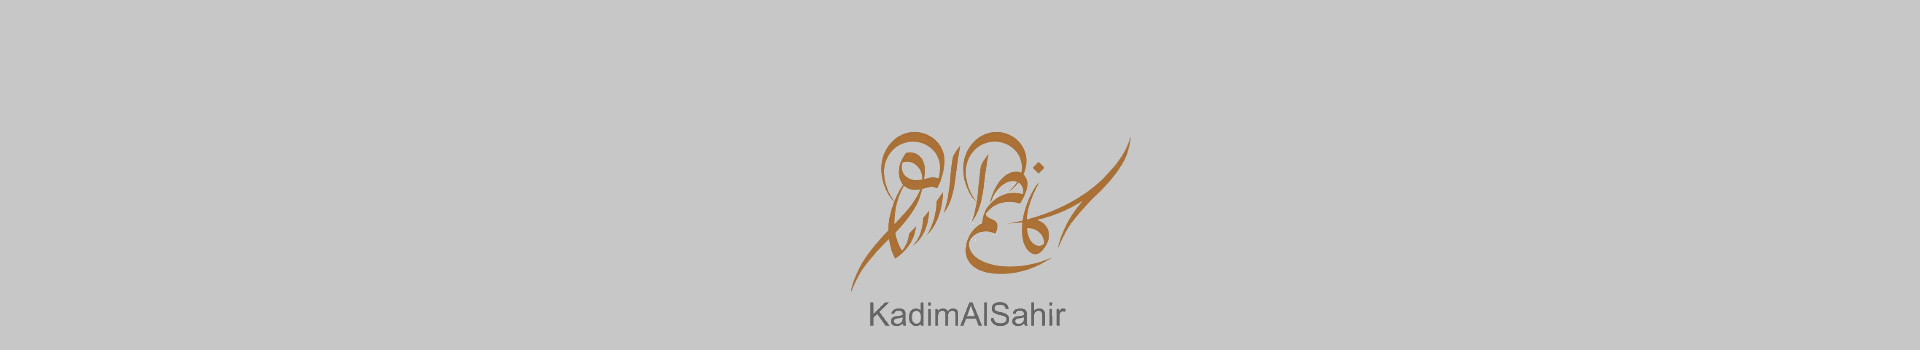 Kadim Al Sahir tickets London Theatre Royal Drury Lane